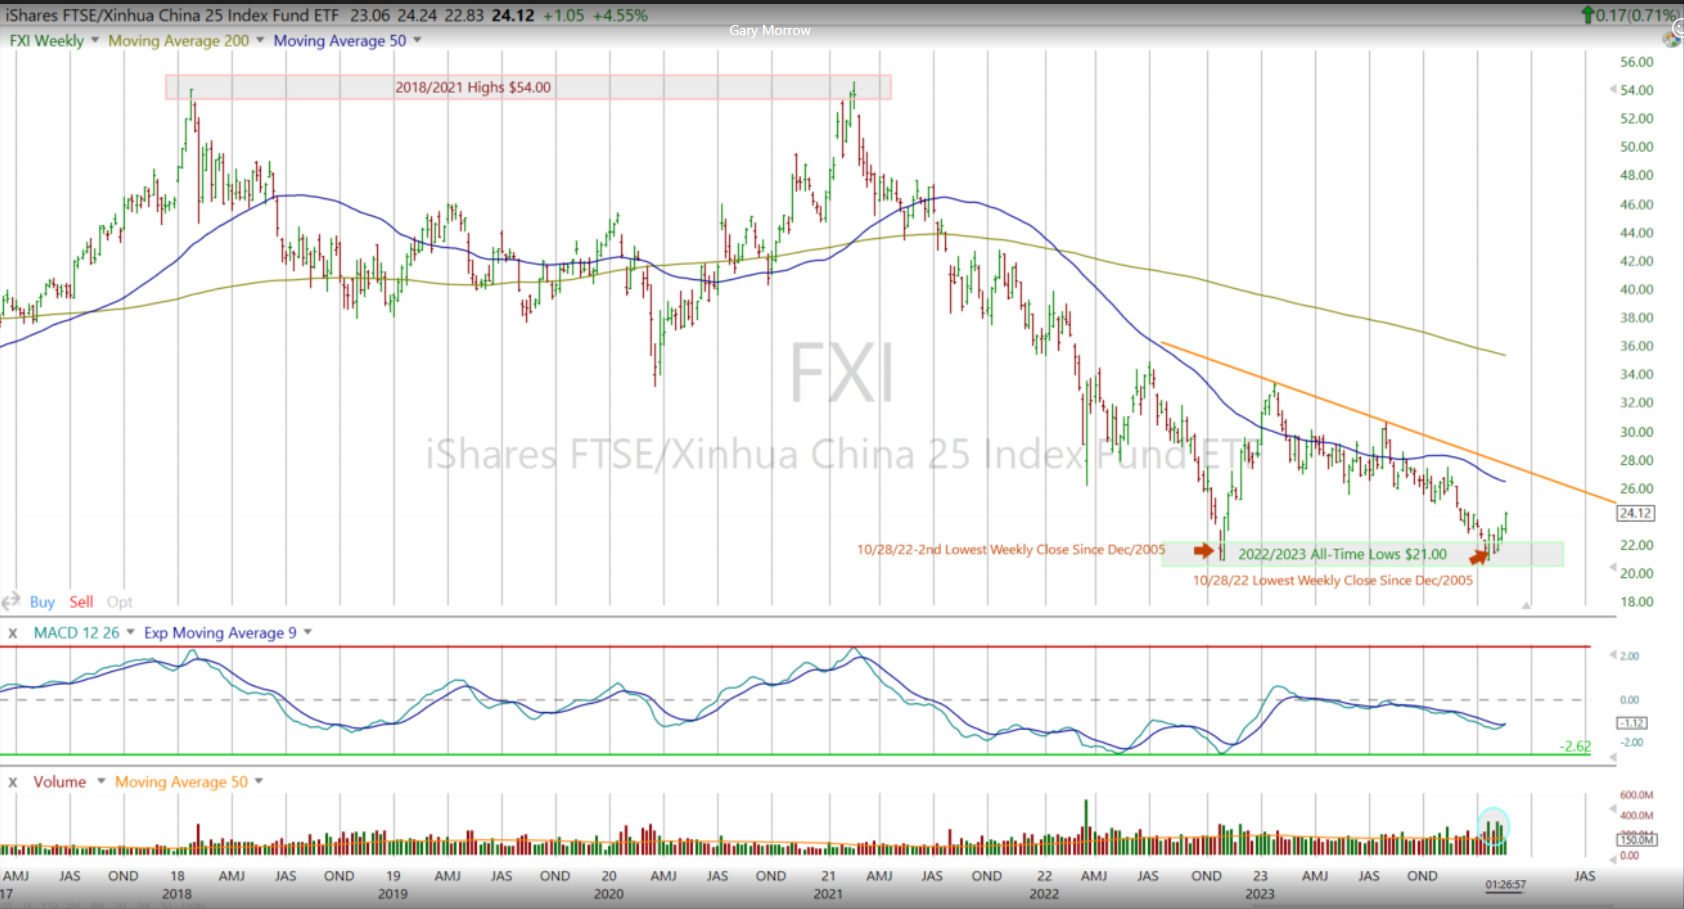 FXI Weekly Chart